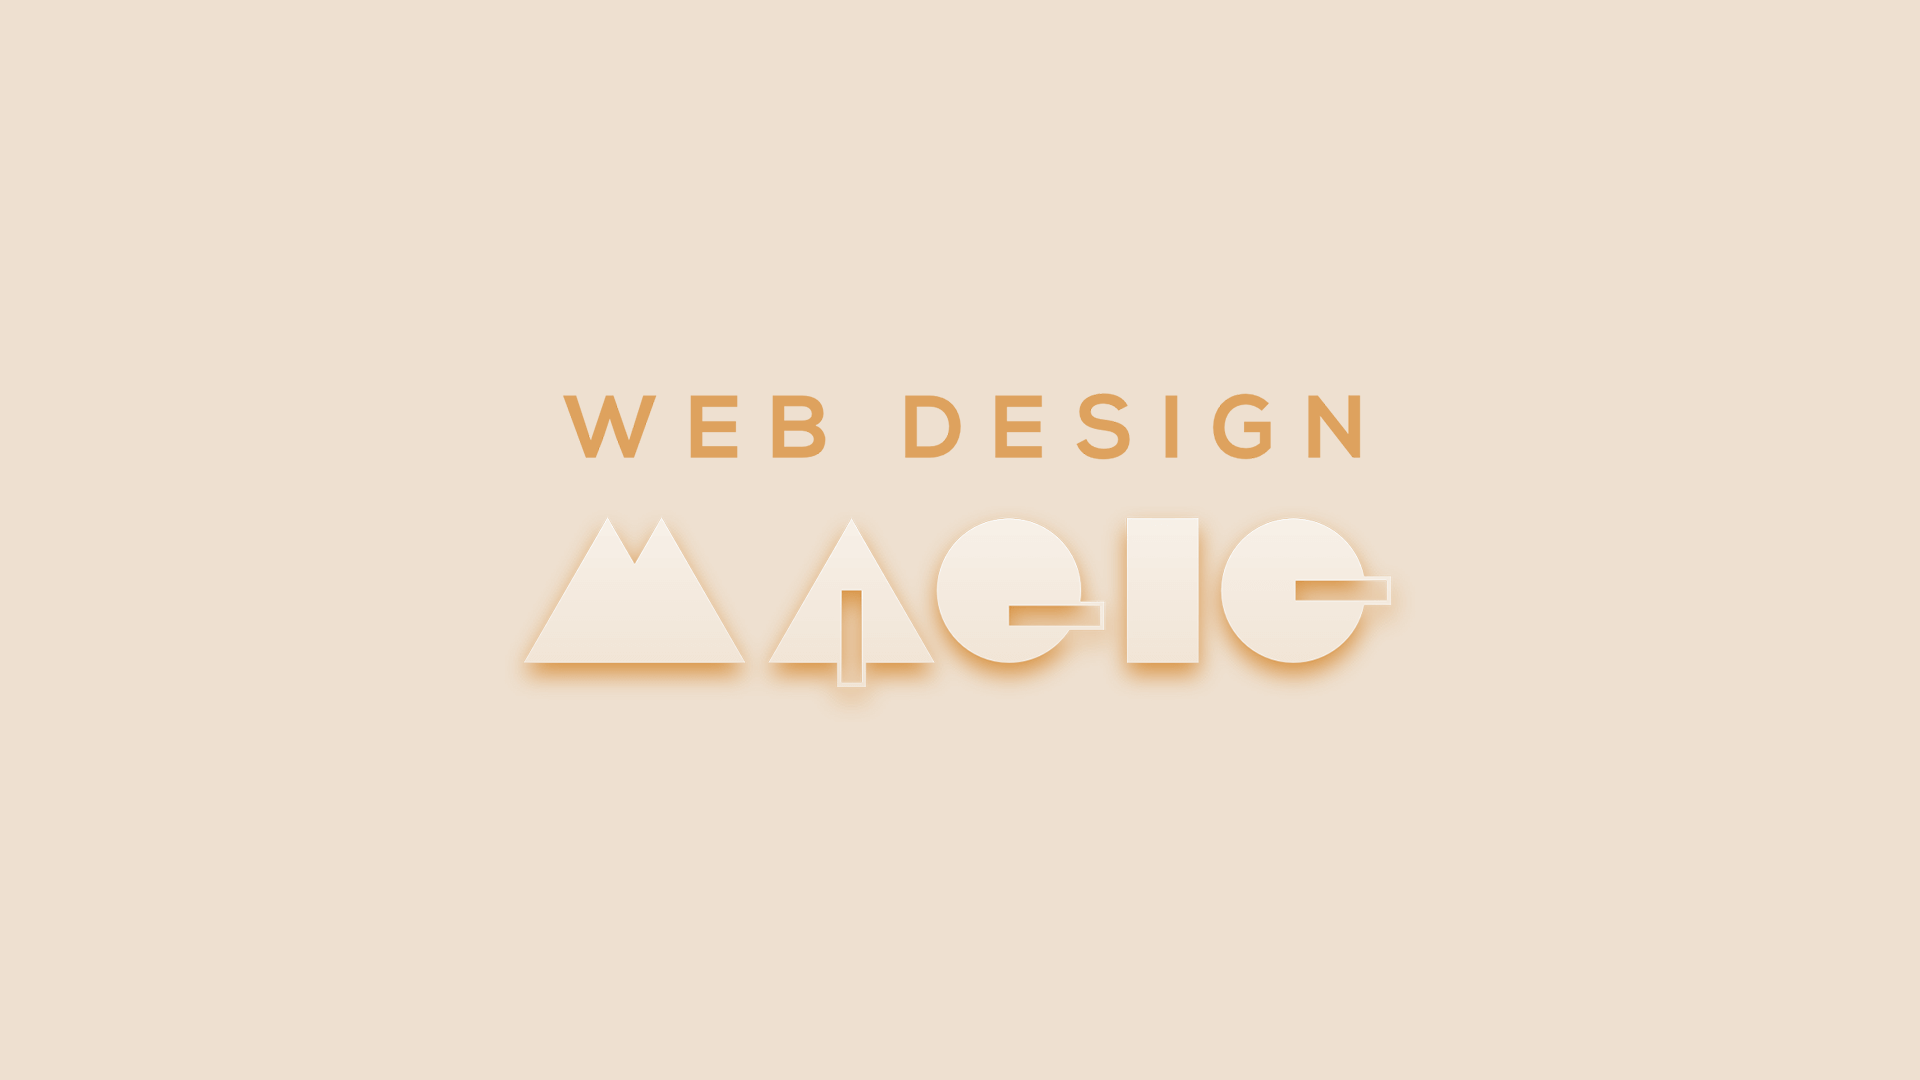 Web Design Magic Poster